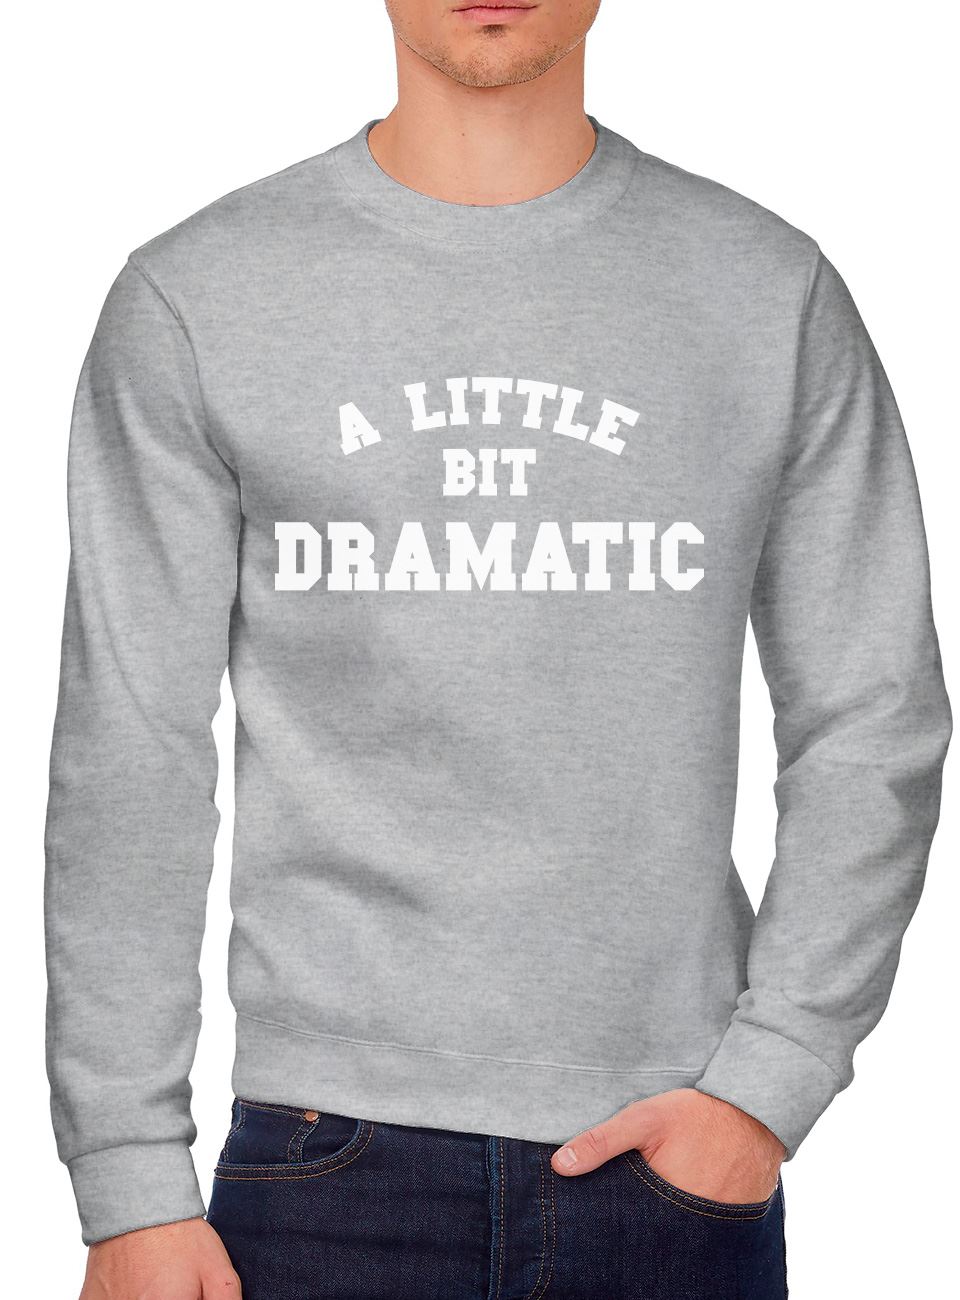 A Little Bit Dramatic - Youth & Mens Sweatshirt